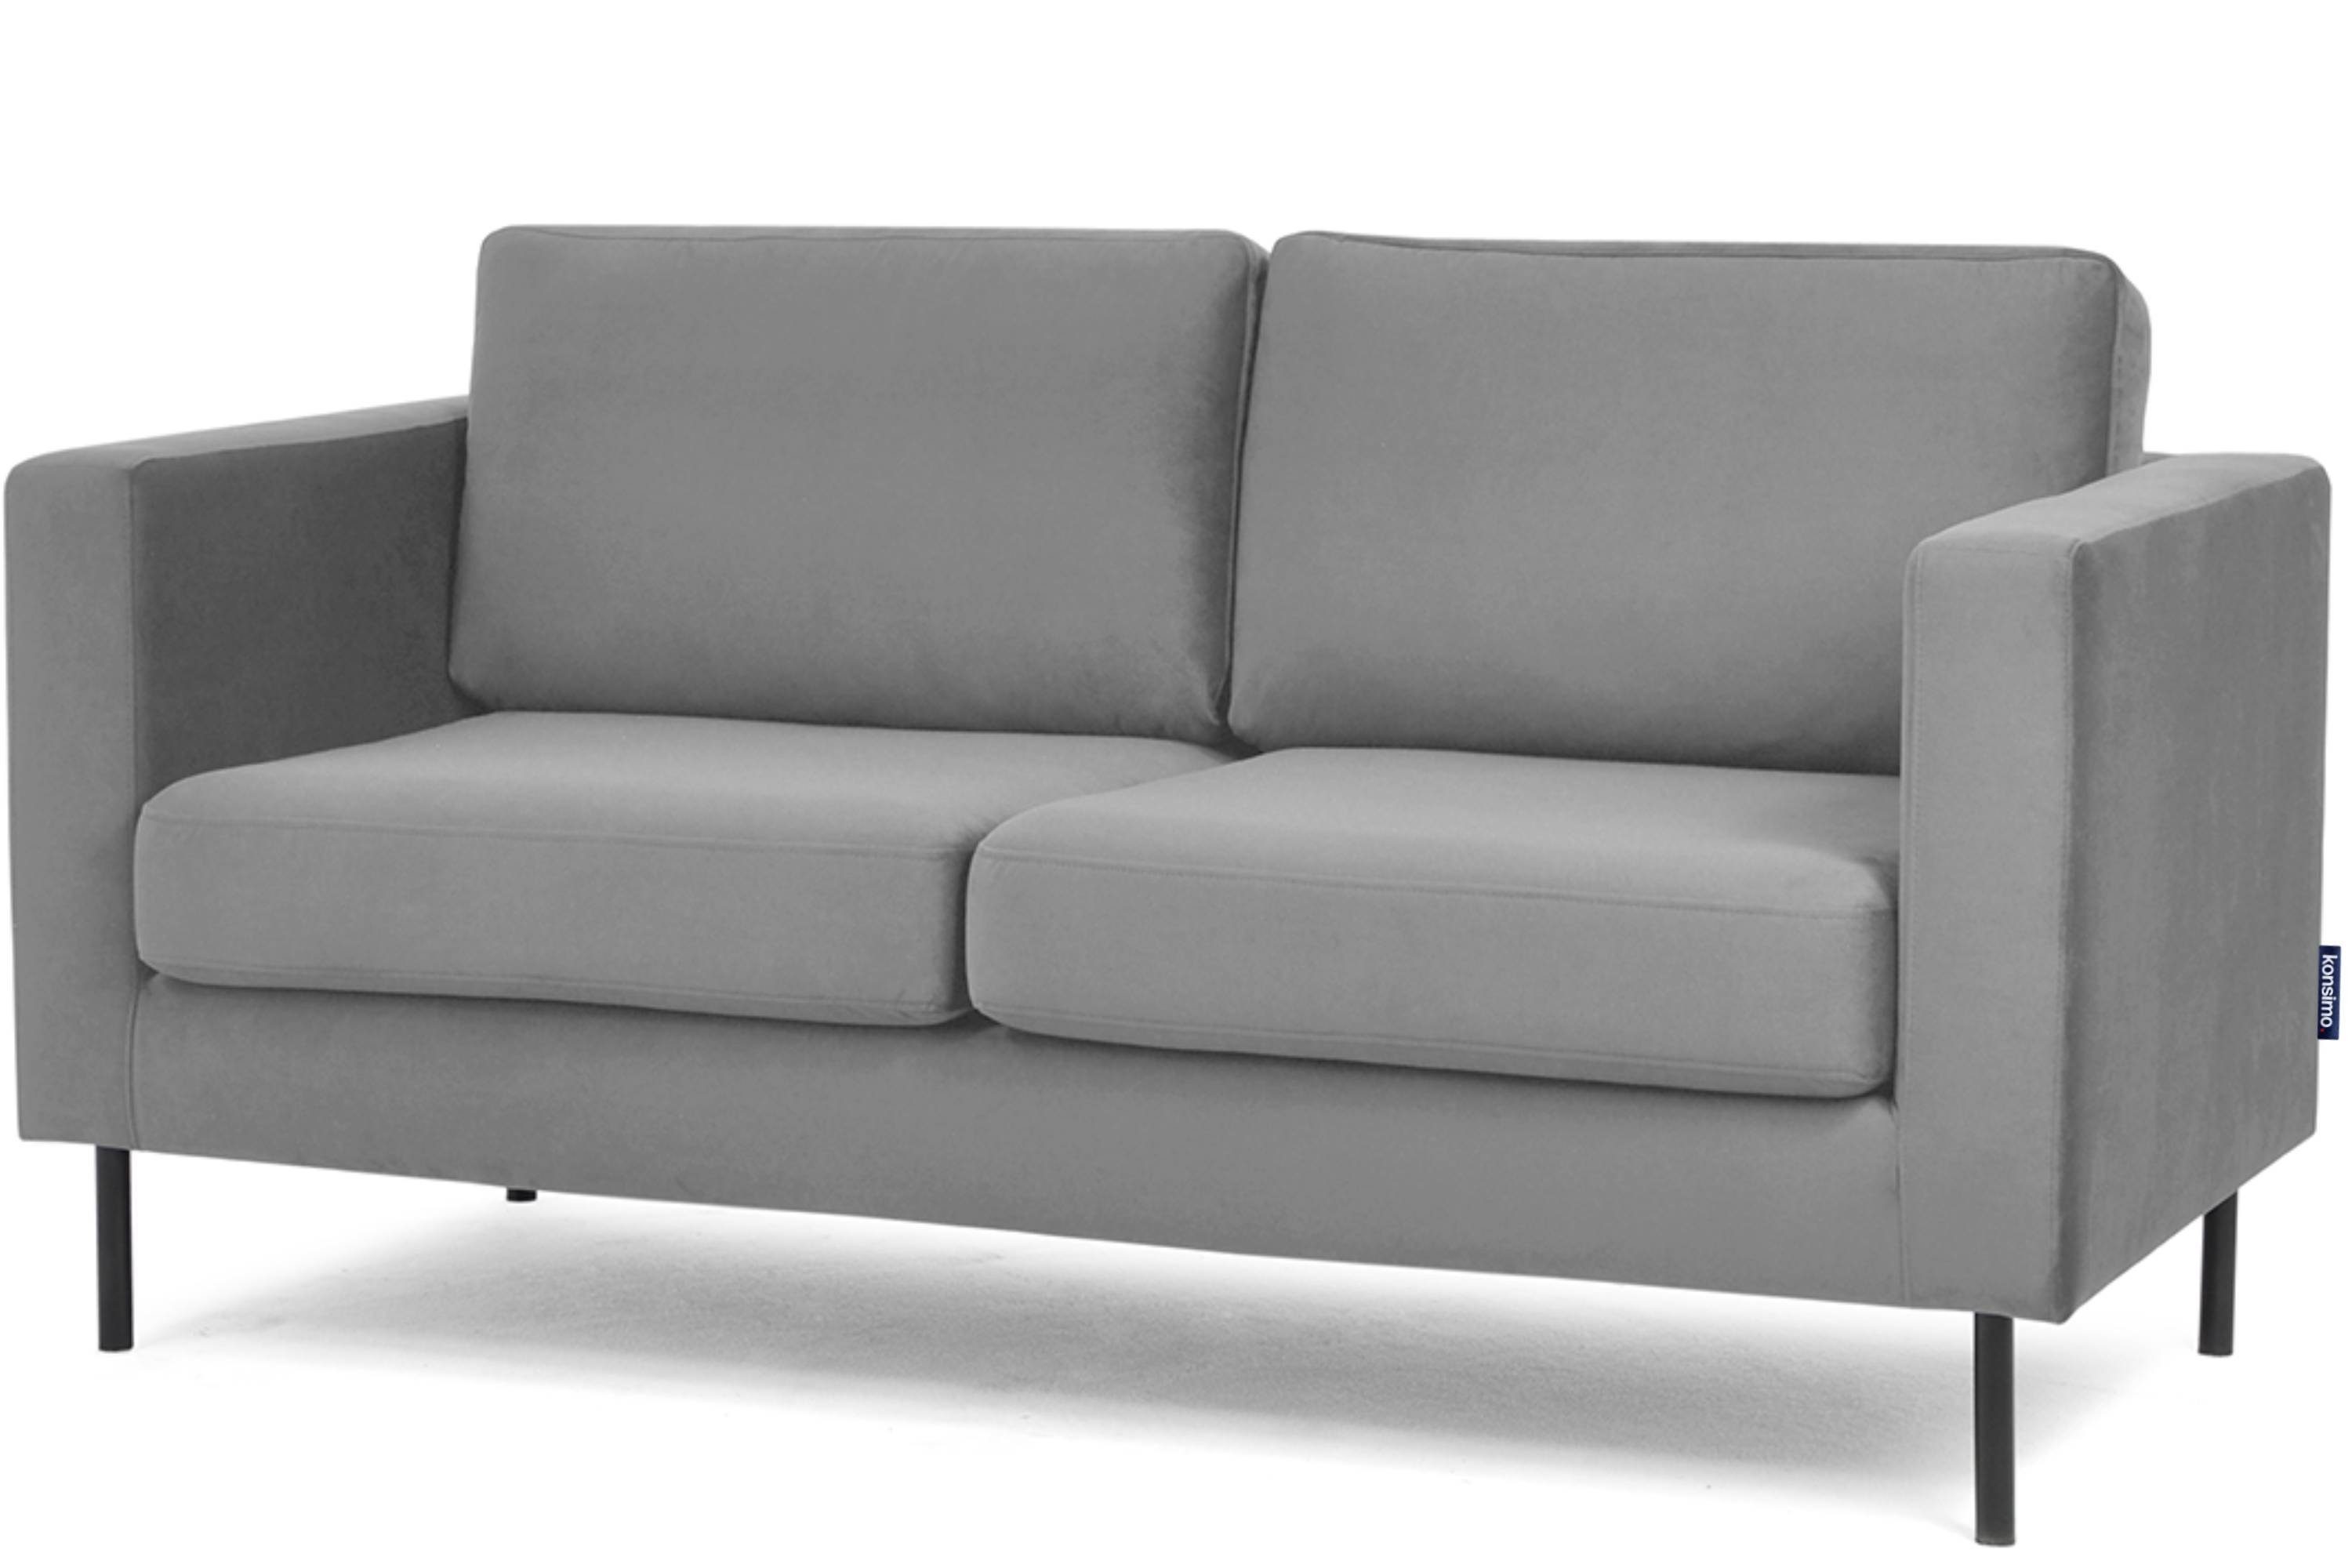 Beine, grau universelles 2 hohe Personen, grau Konsimo Design | TOZZI grau Sofa 2-Sitzer |